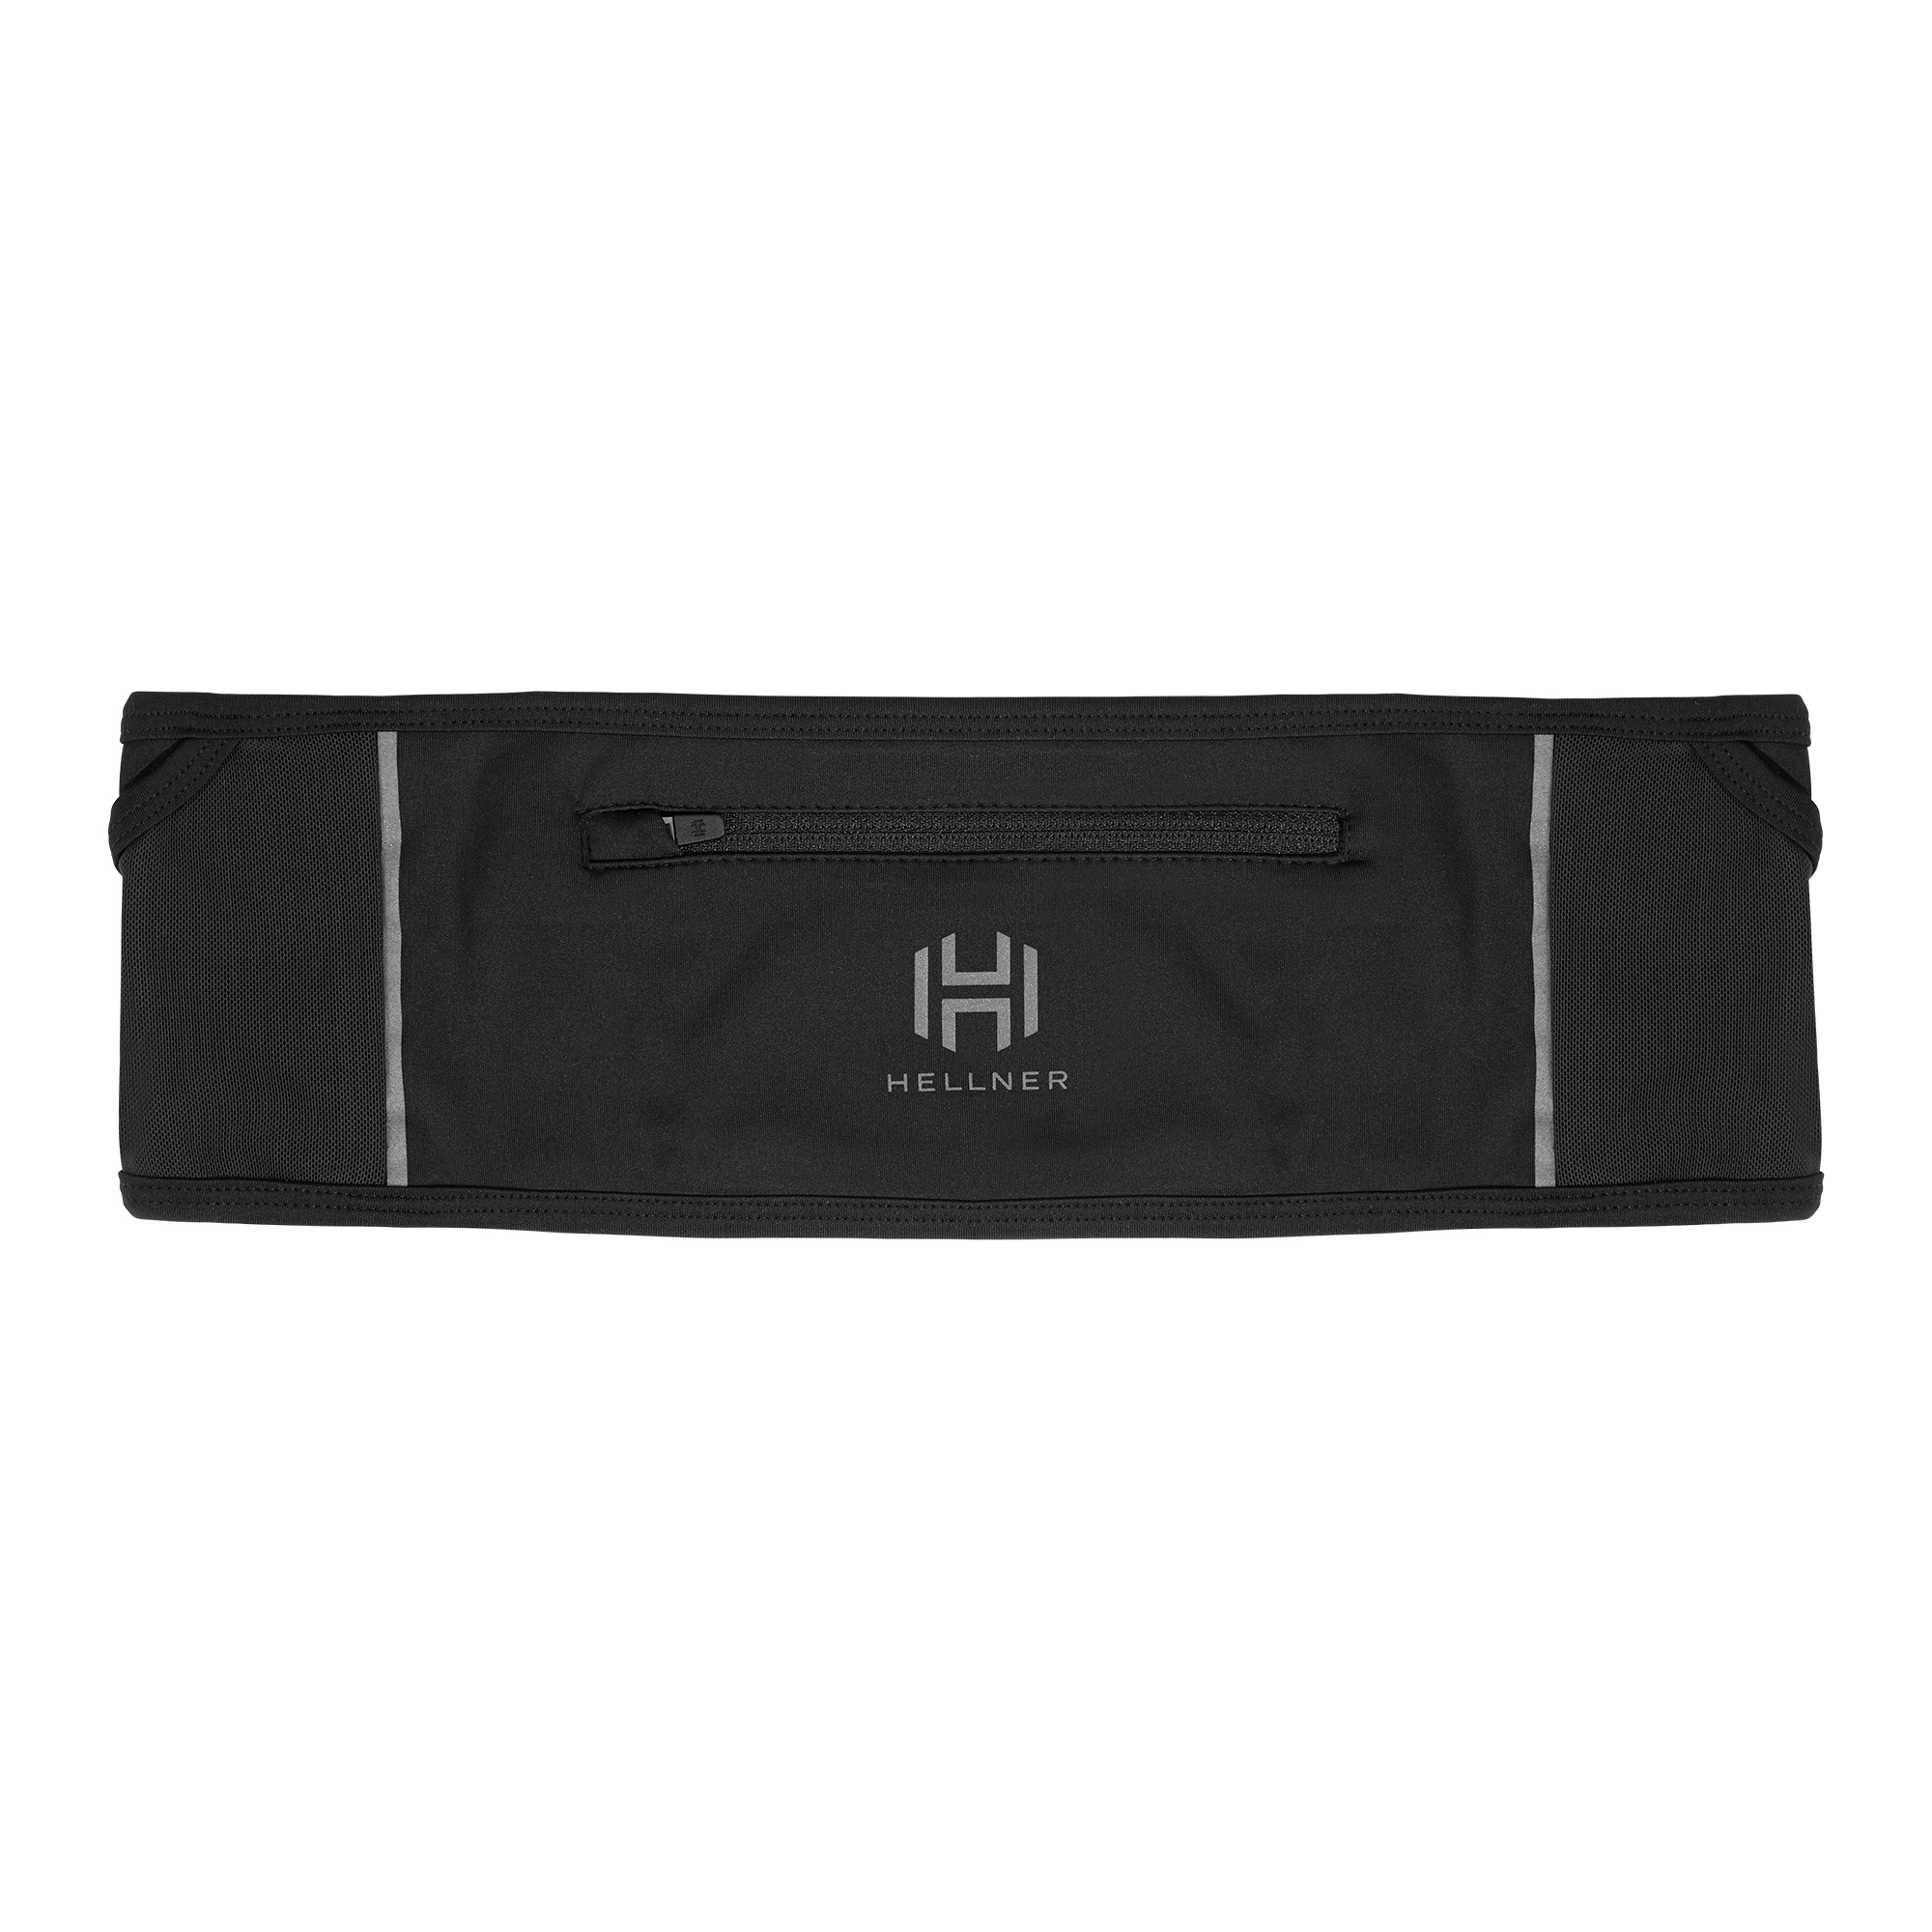 Hellner Lihiti Running Accessories Belt Black Beauty